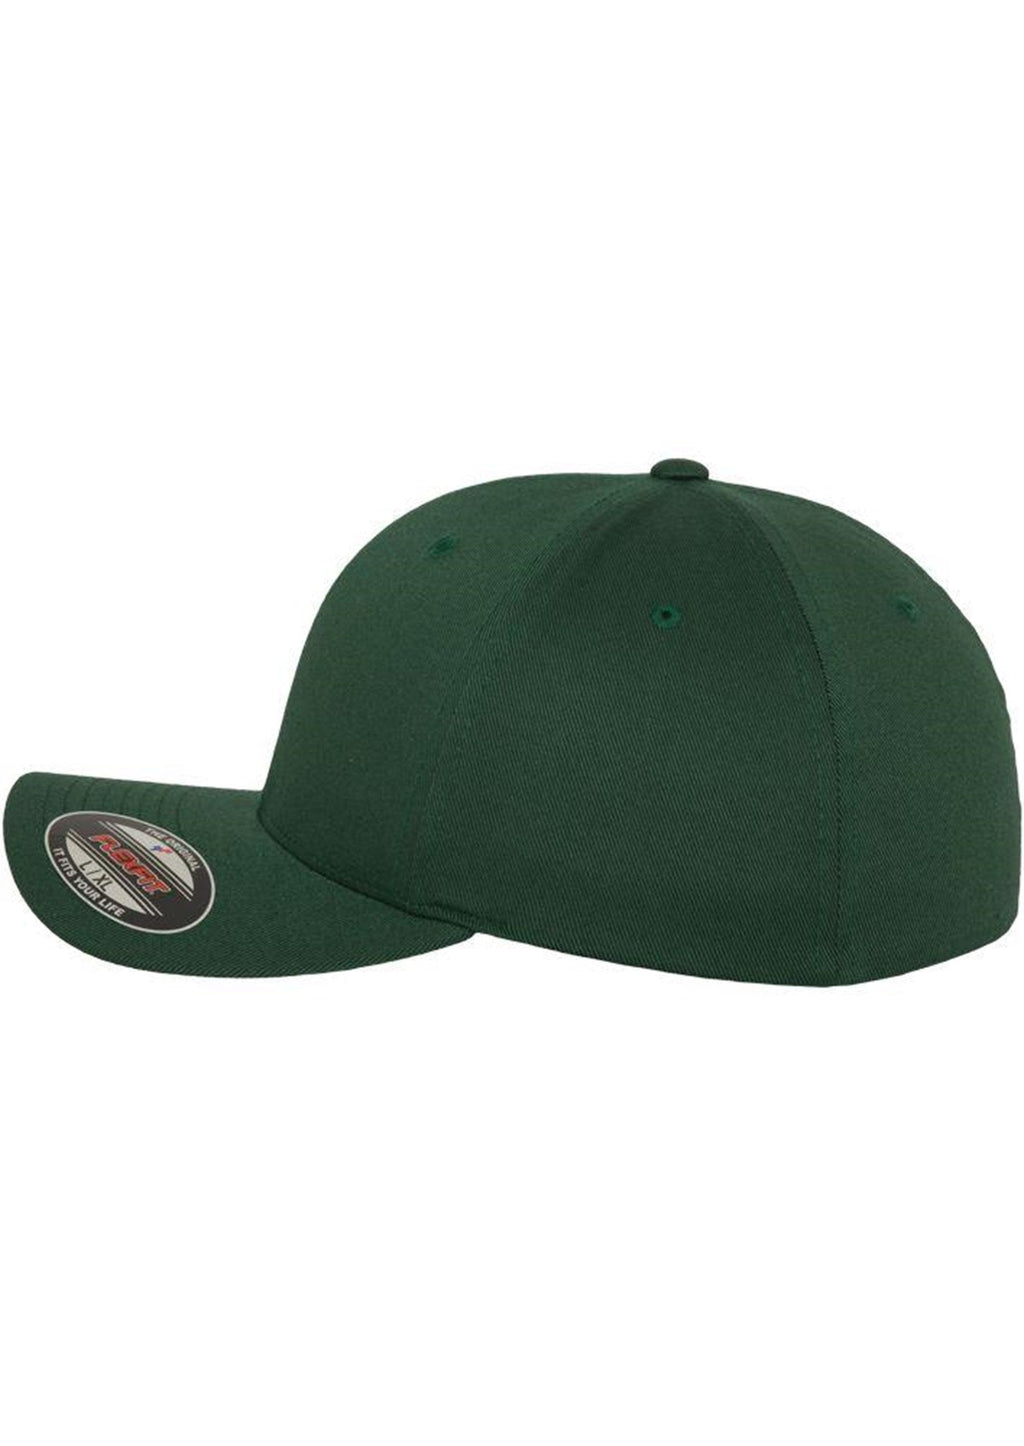 FlexFit原始棒球帽 - 深绿色